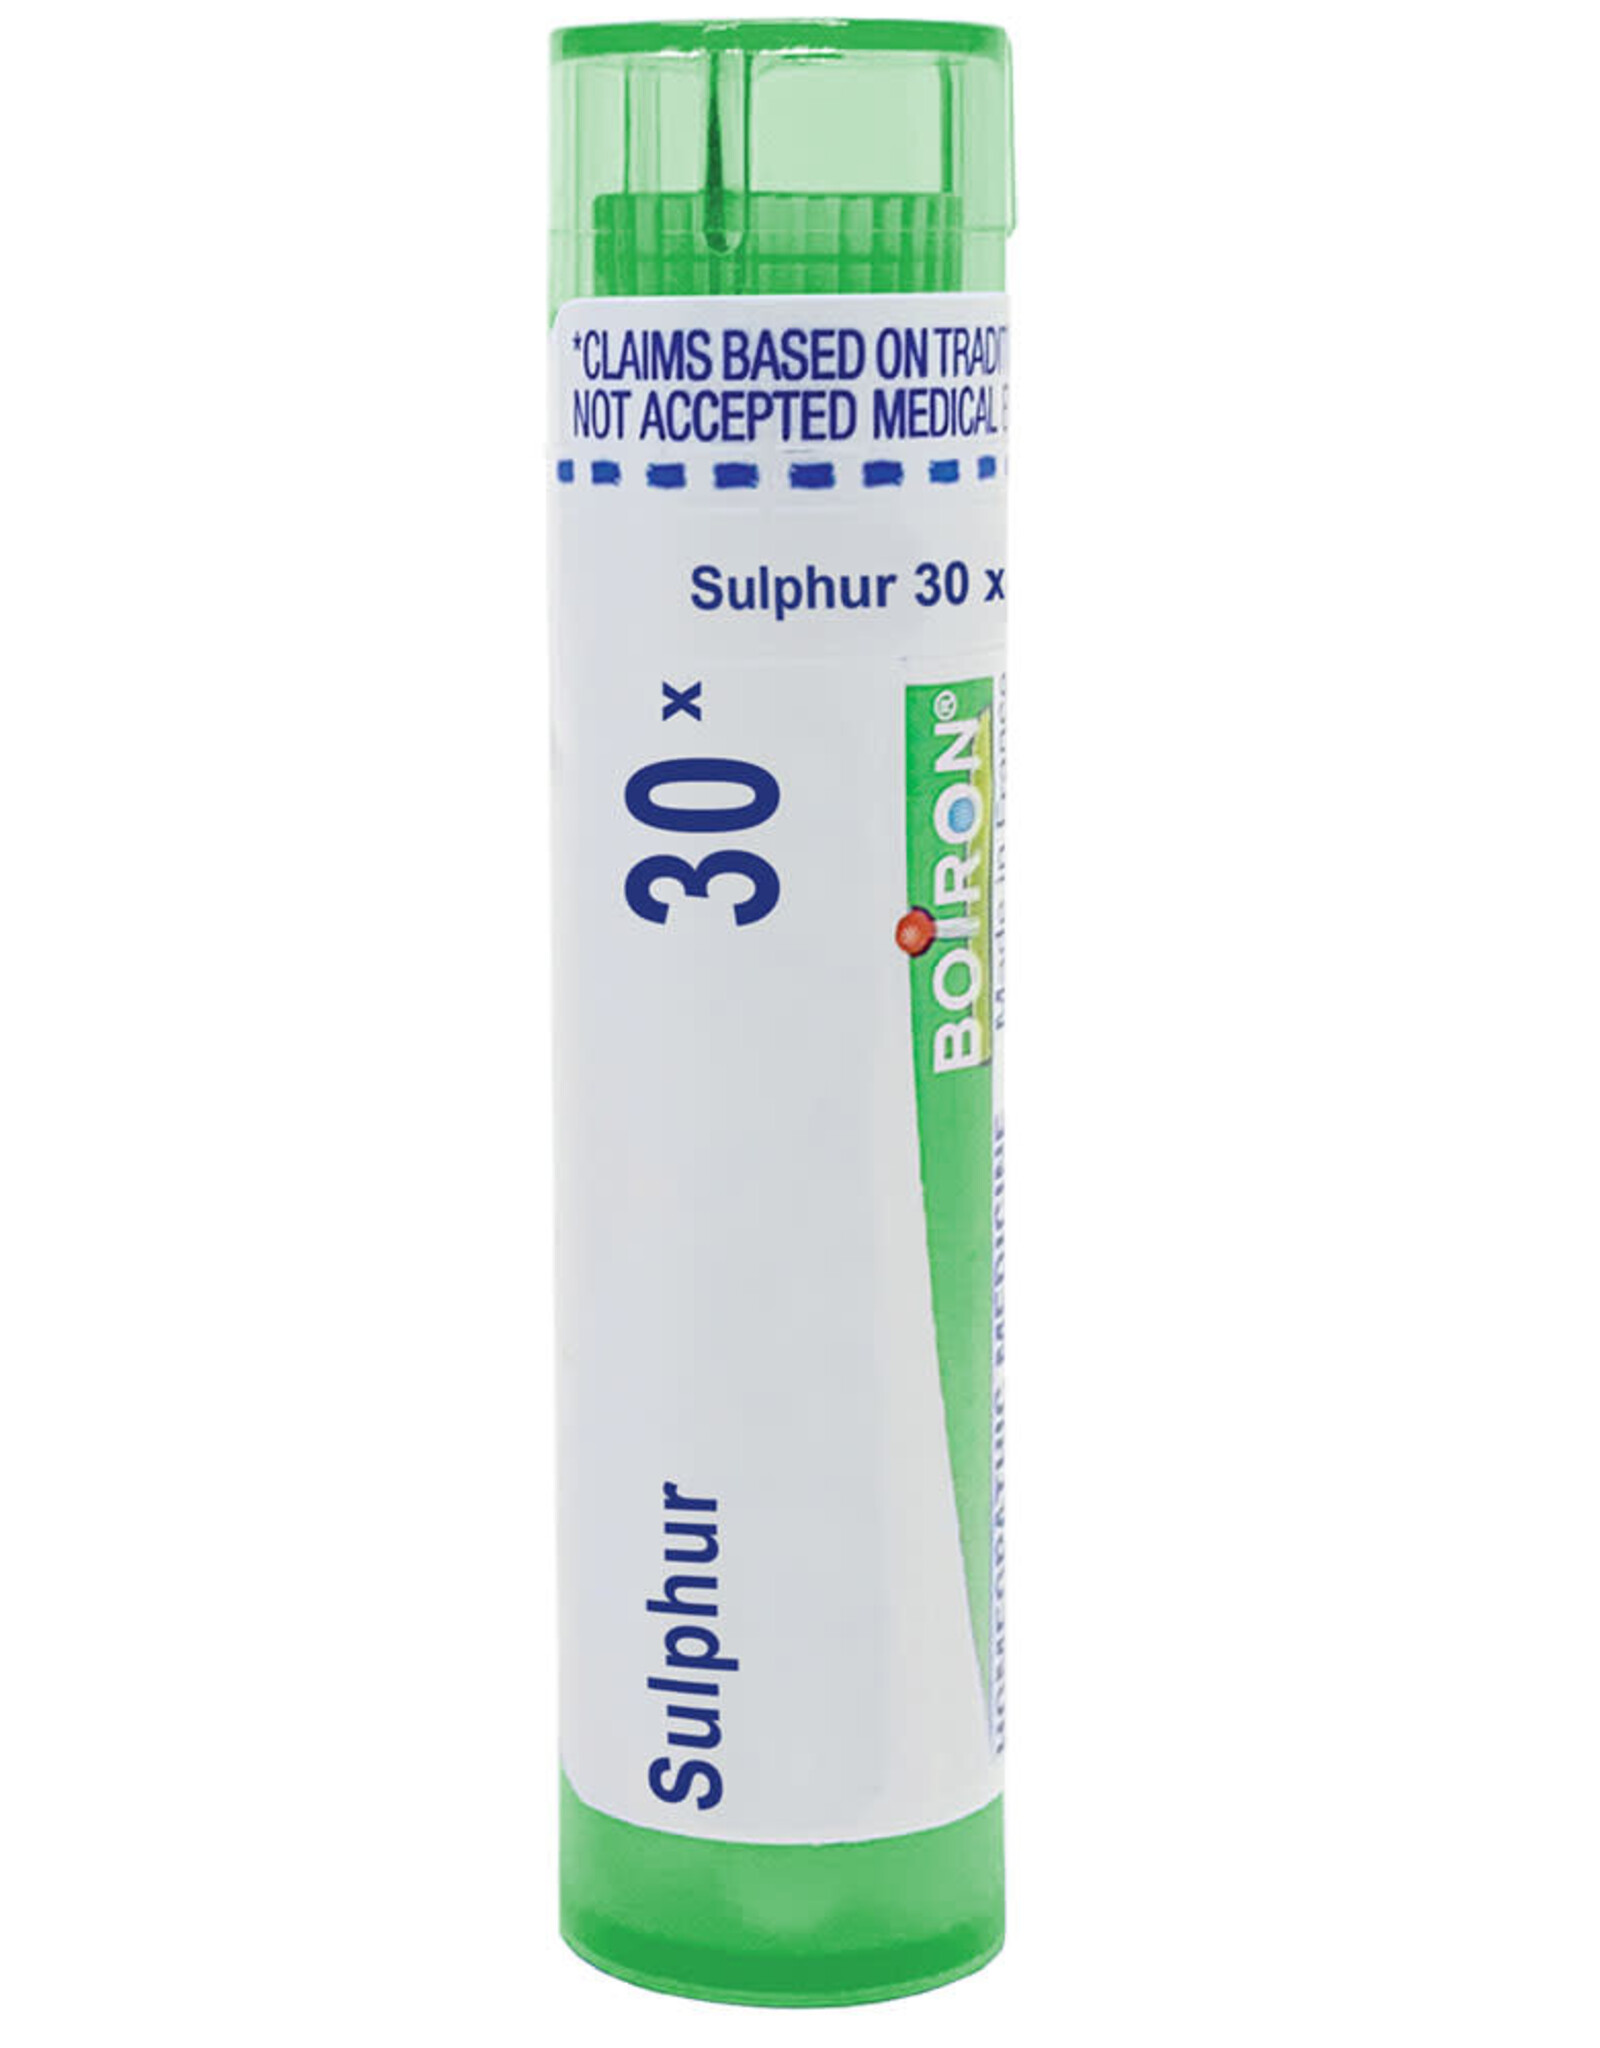 Boiron Homeopathics - 30x - 80 pellets Sulphur